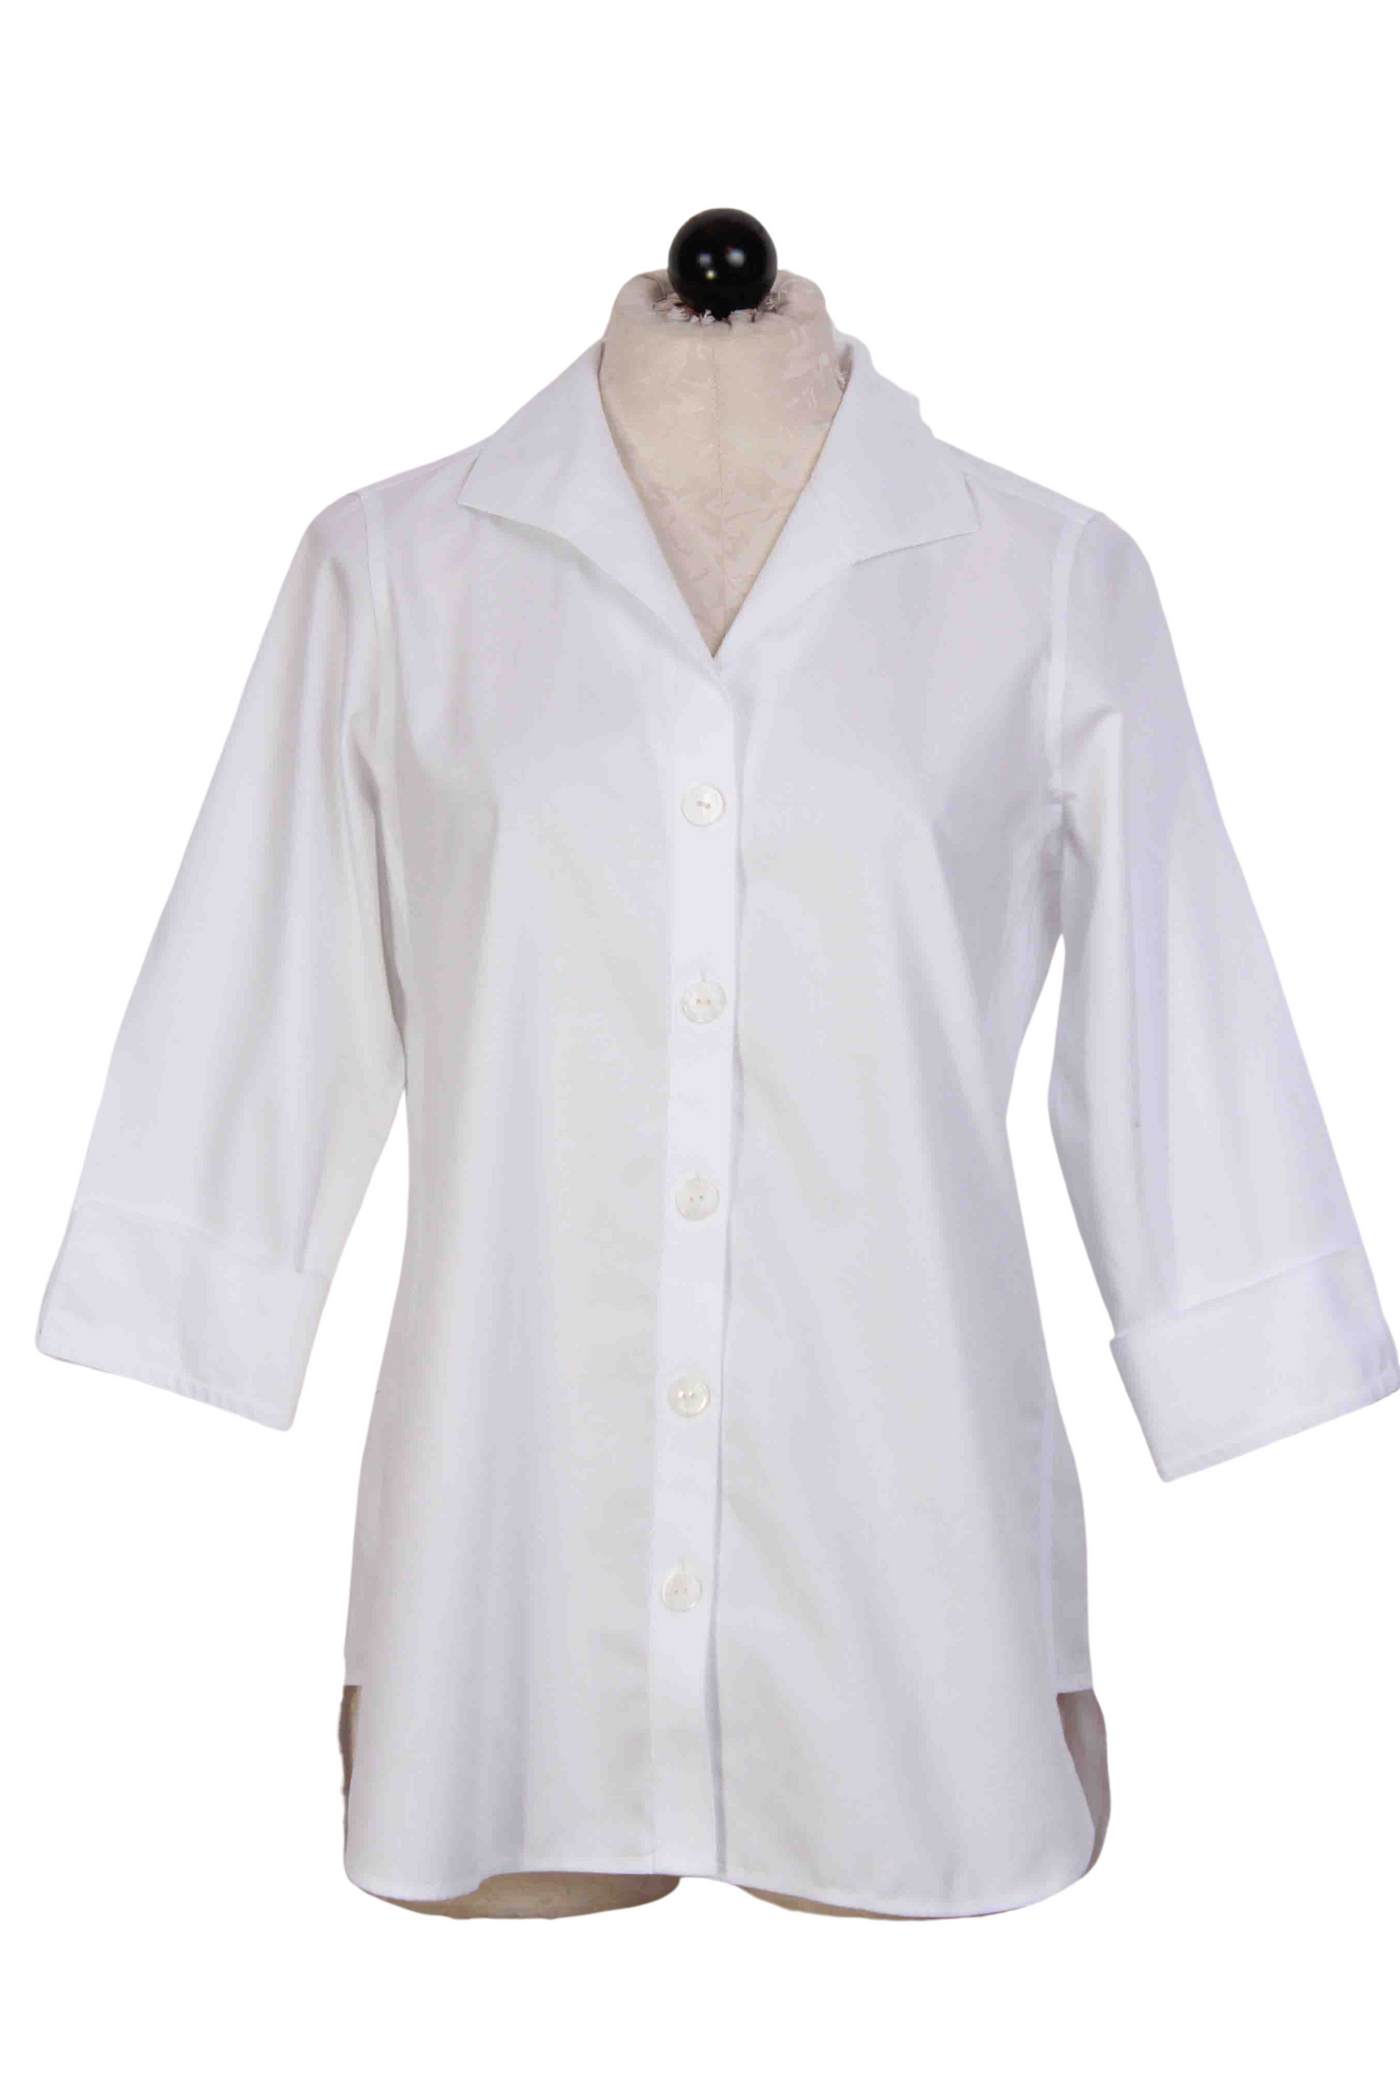 Classic White 3/4 Sleeve Tunic Style Pandora Blouse by Foxcroft